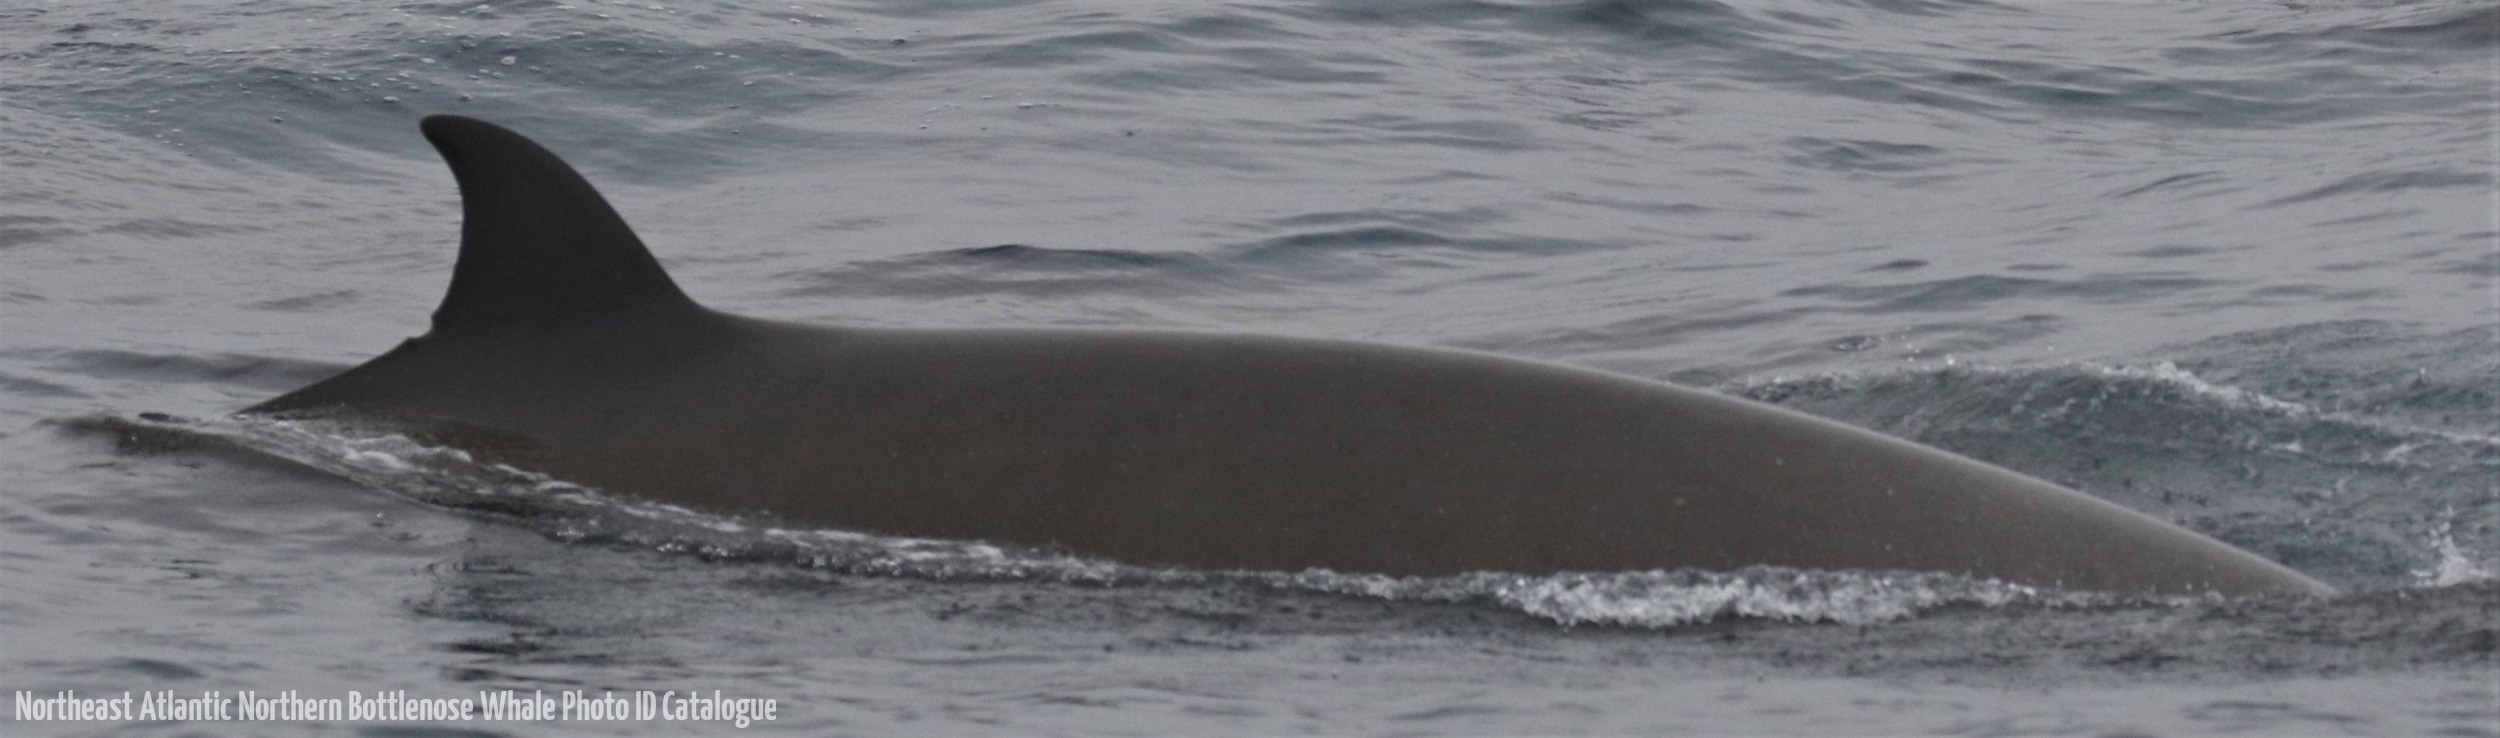 Whale ID: 0390,  Date taken: 25-06-2016,  Photographer: Naomi Boon